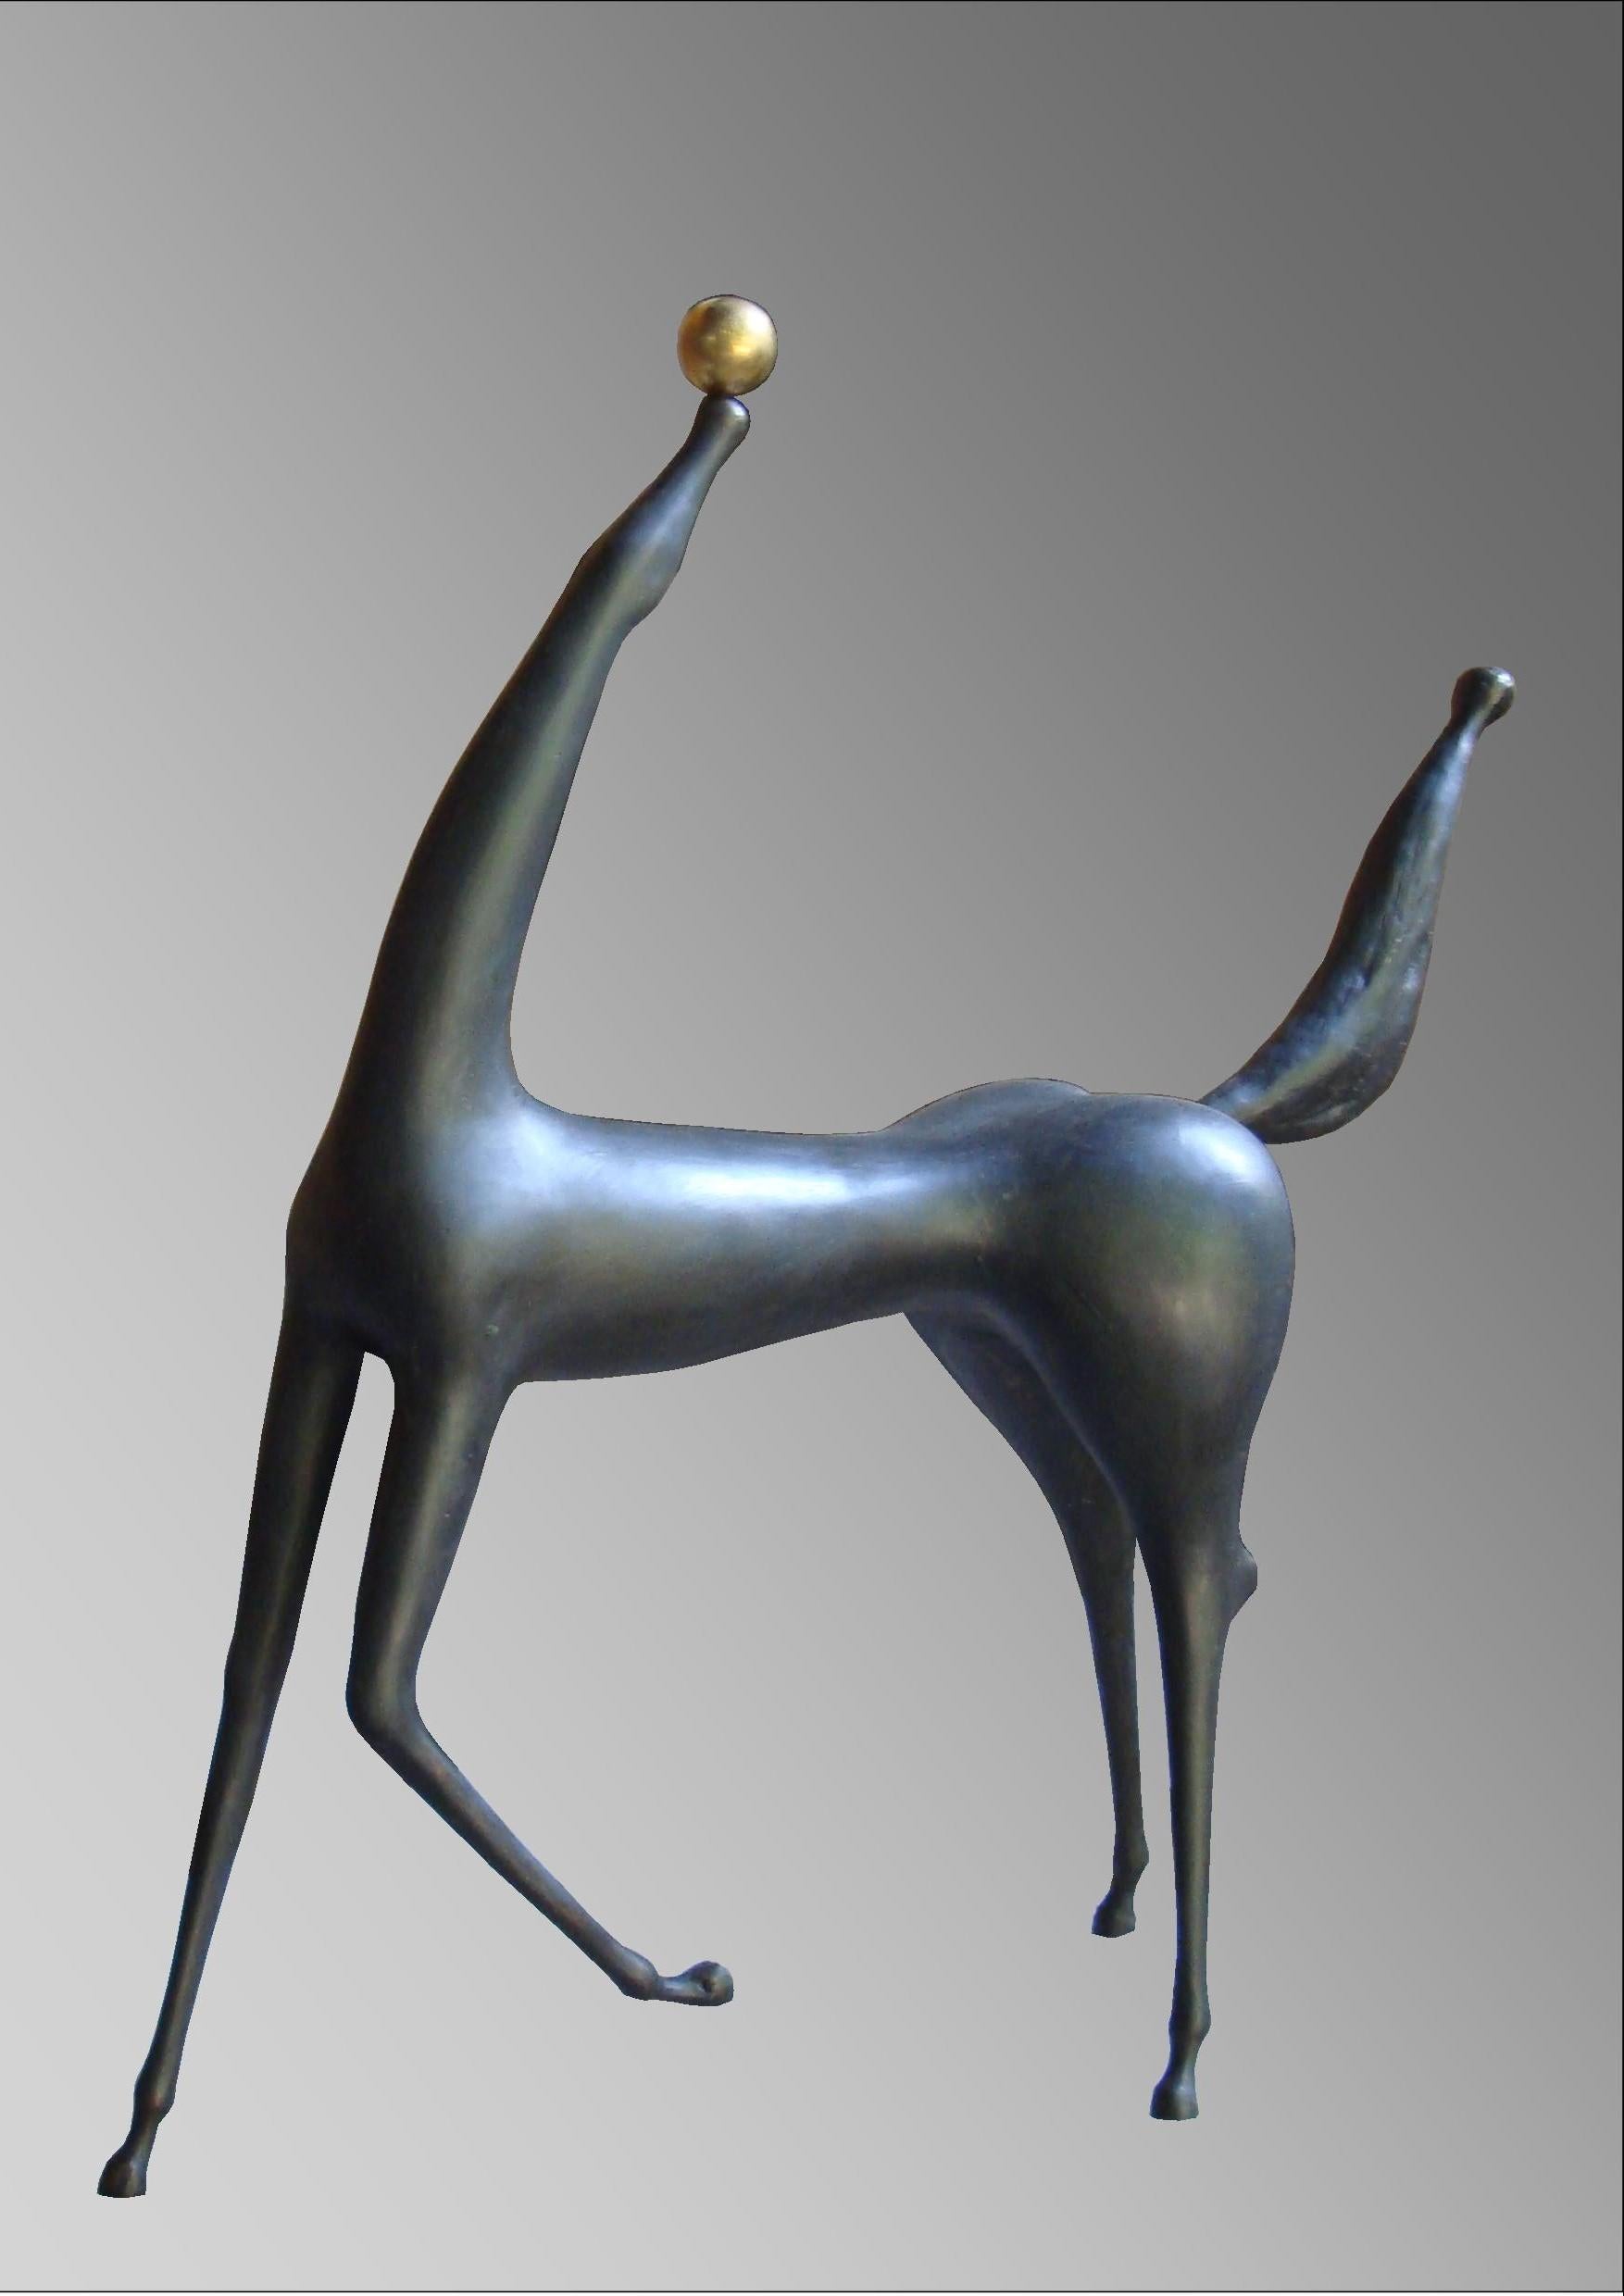 Georgian Contemporary Sculpture by Rezo Khasia - Fiesta Horse